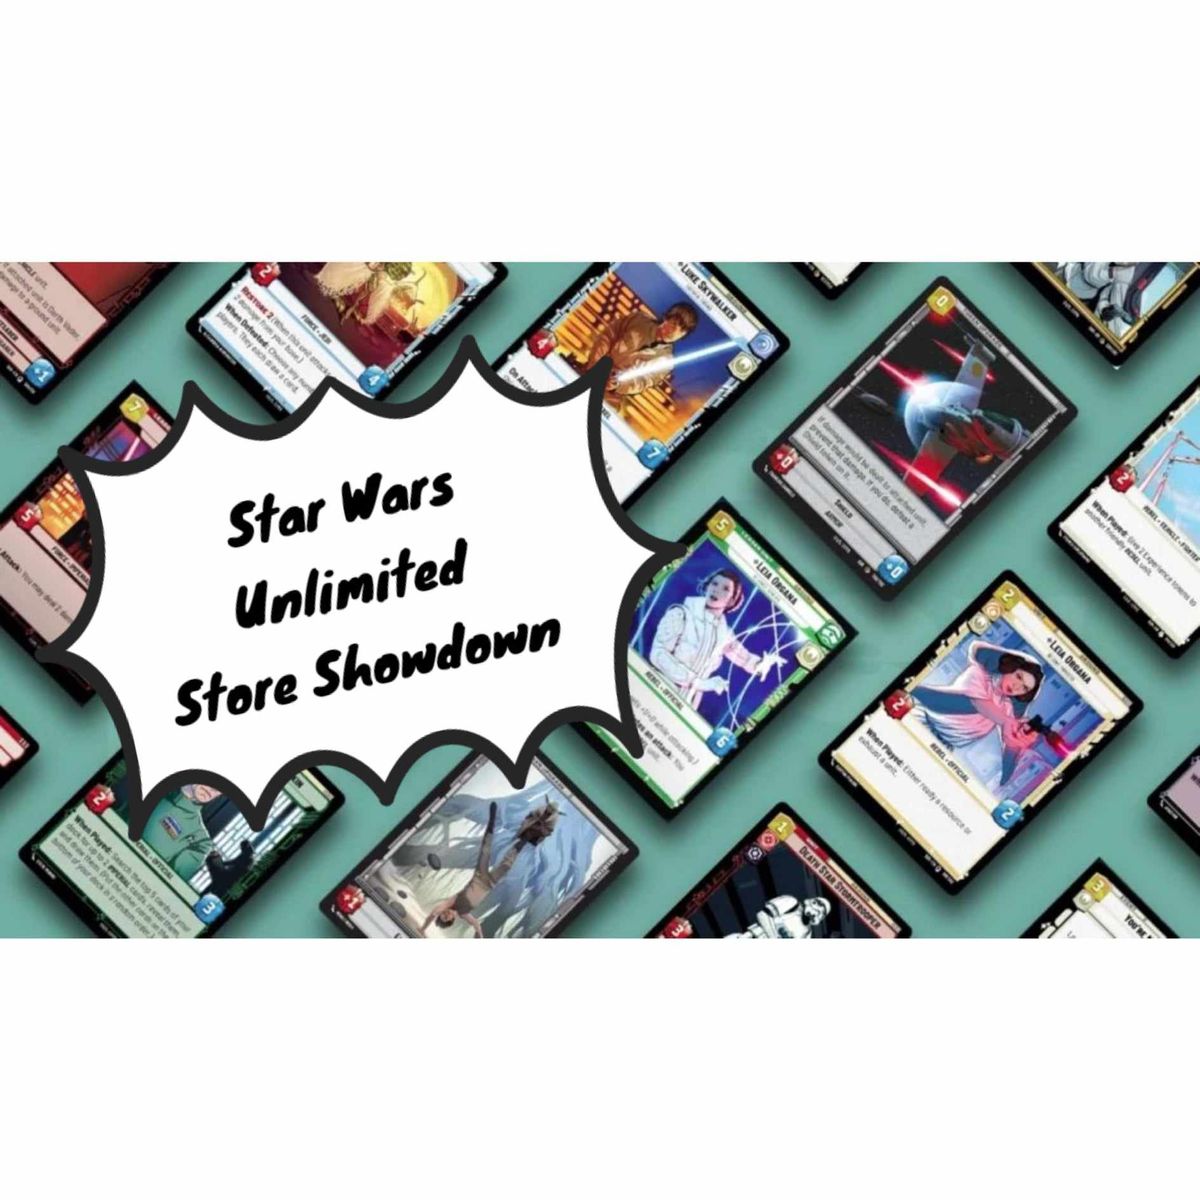 Star Wars Unlimited Store Showdown Amsterdam